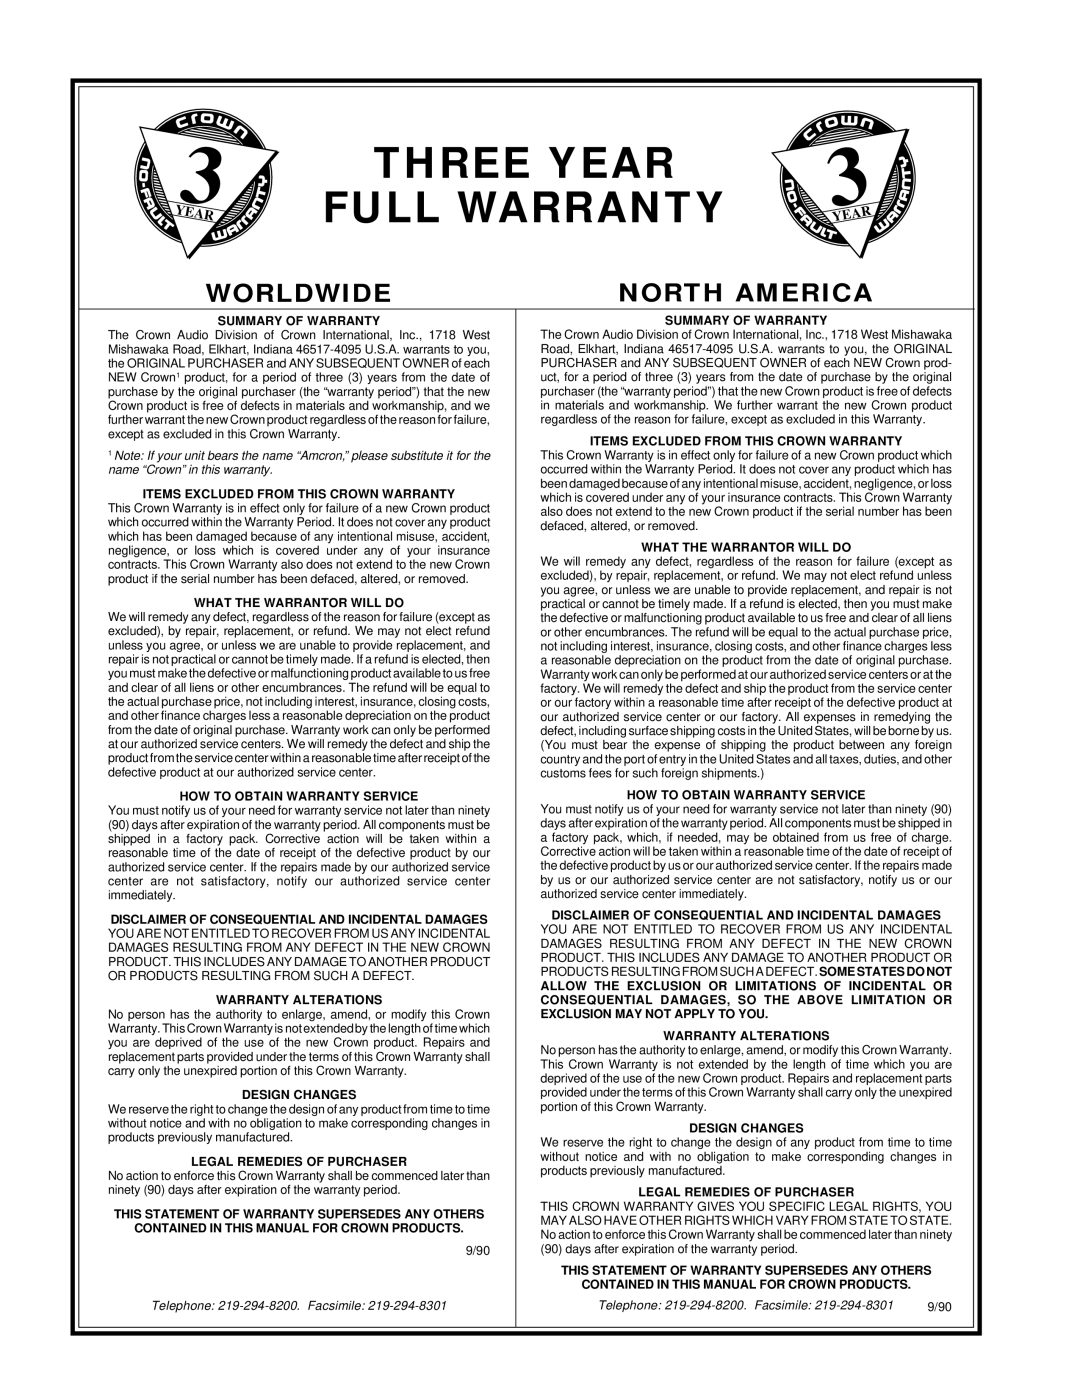 Crown Audio IQ P.I.P.-DSP manual Three Year Full Warranty, Worldwide, North America, Telephone 219-294-8200.Facsimile, 9/90 